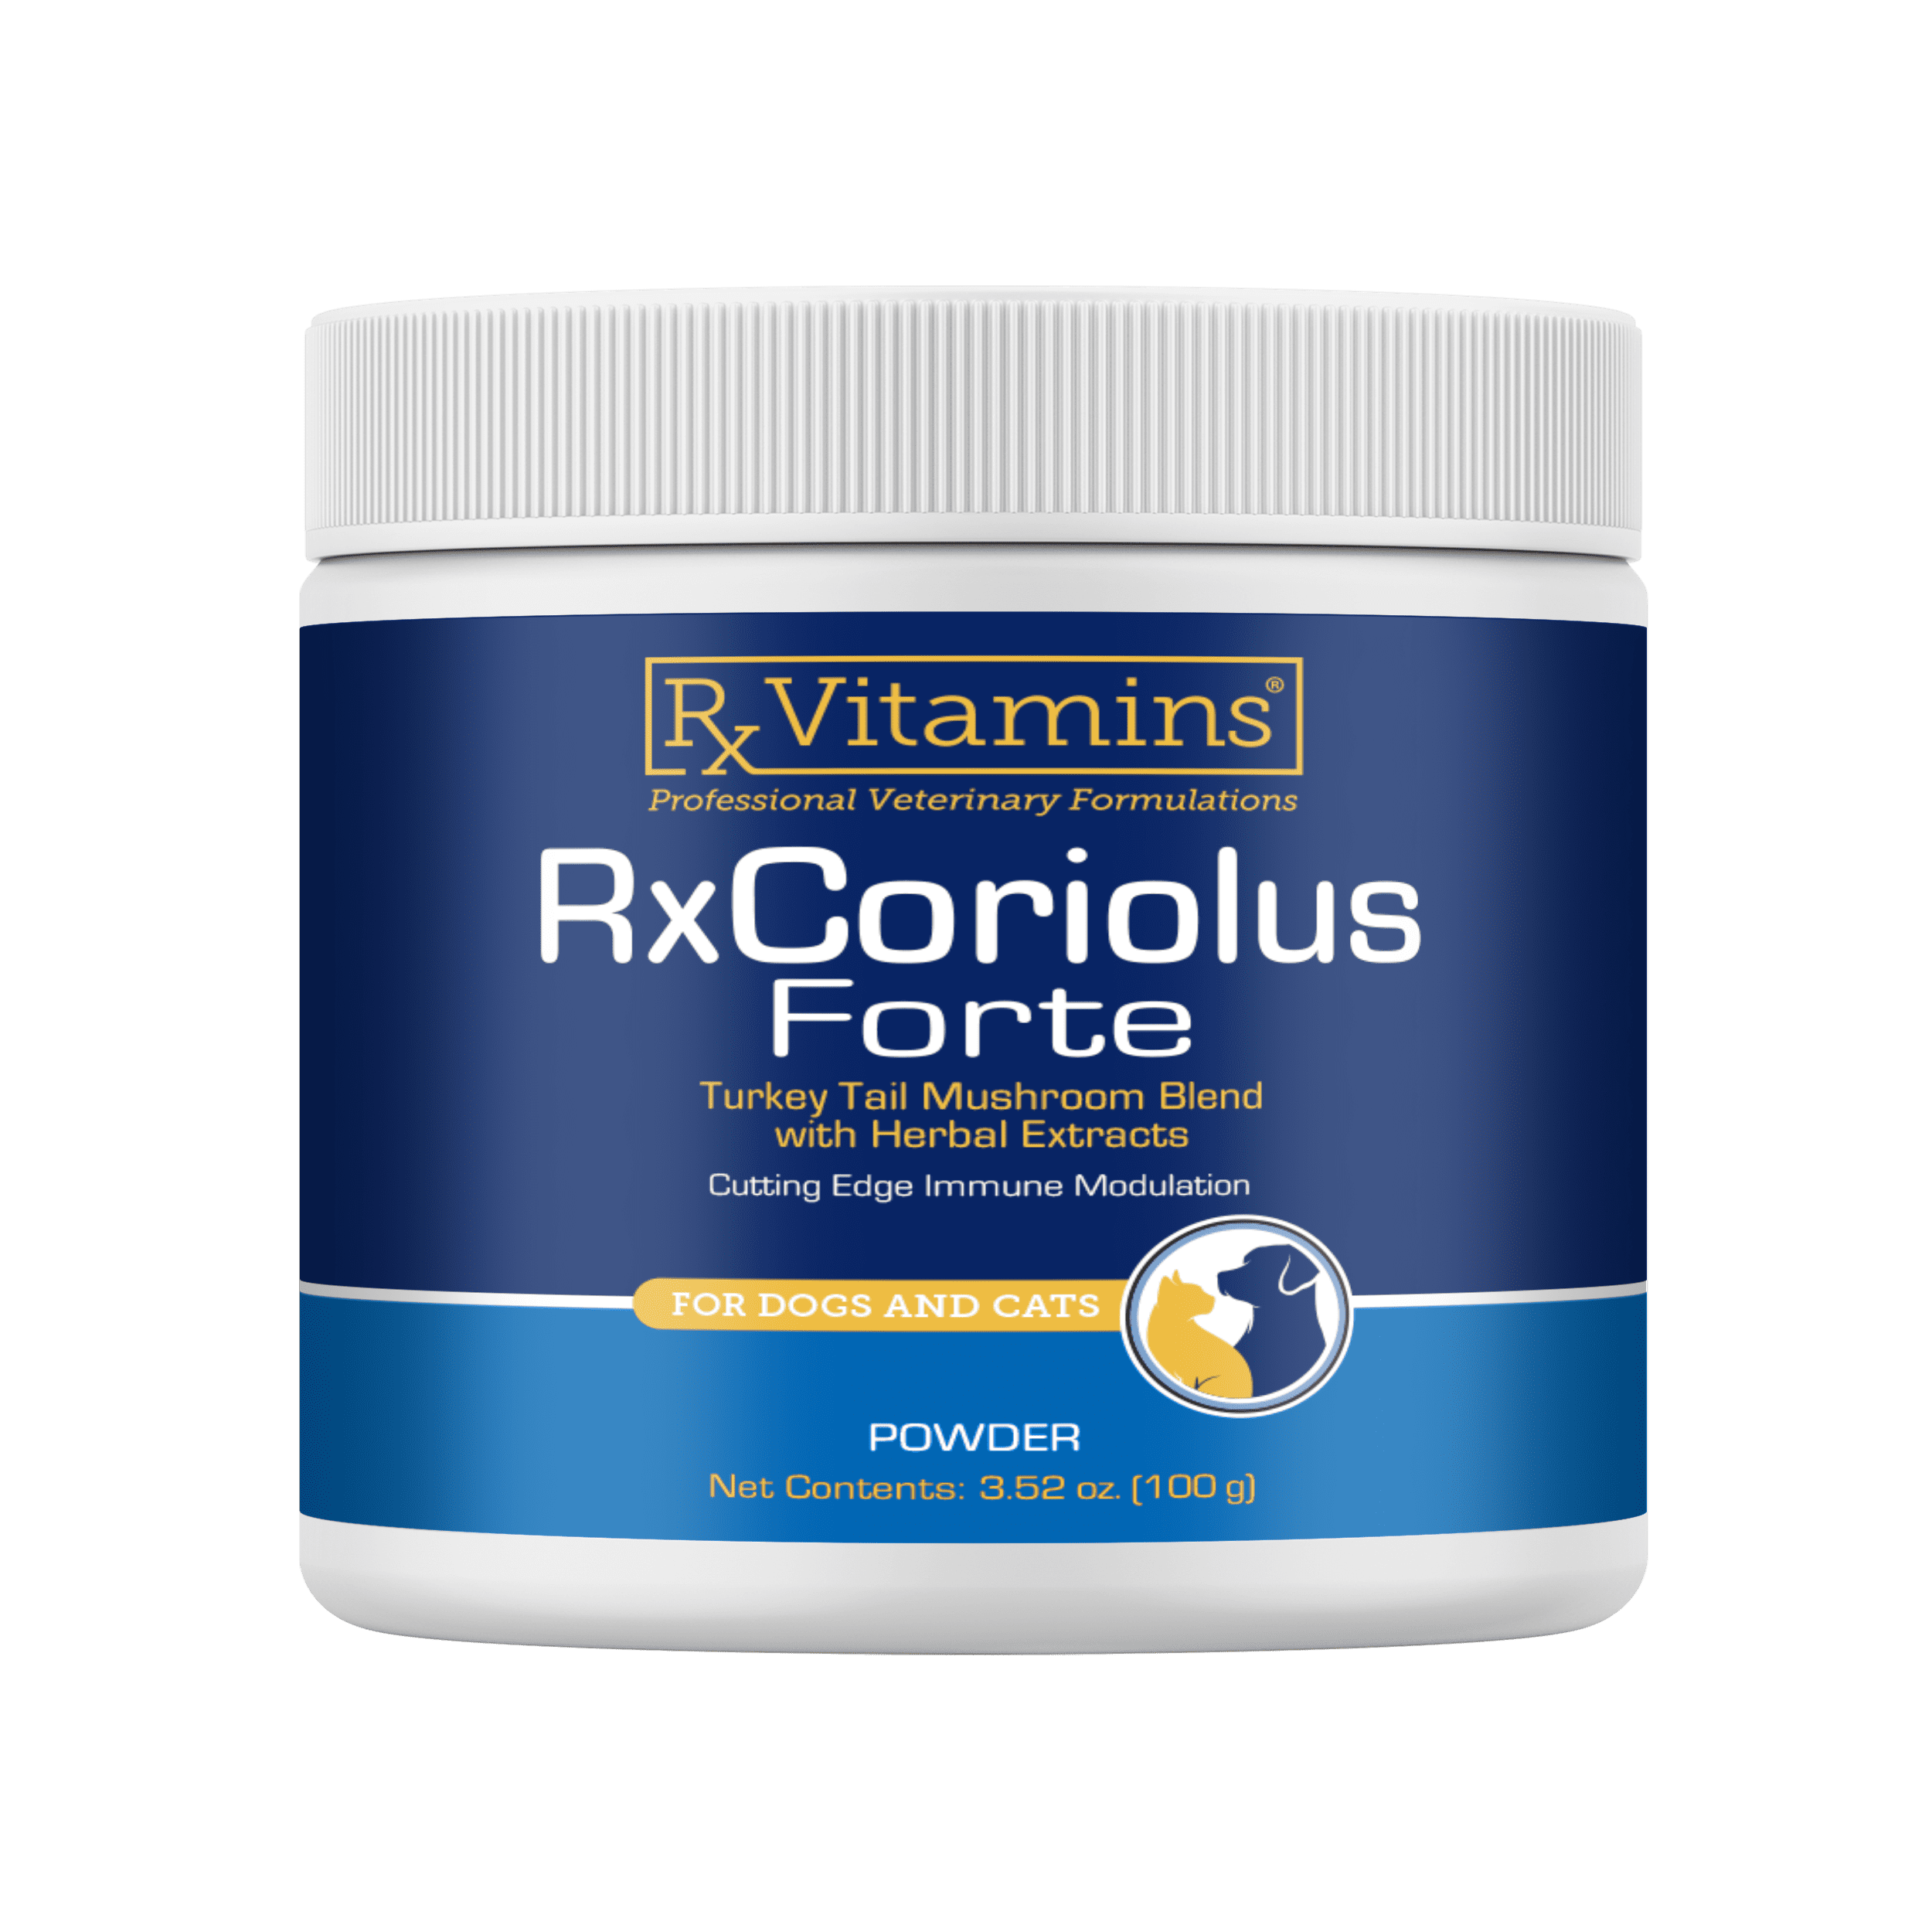 Rx Coriolus Forte